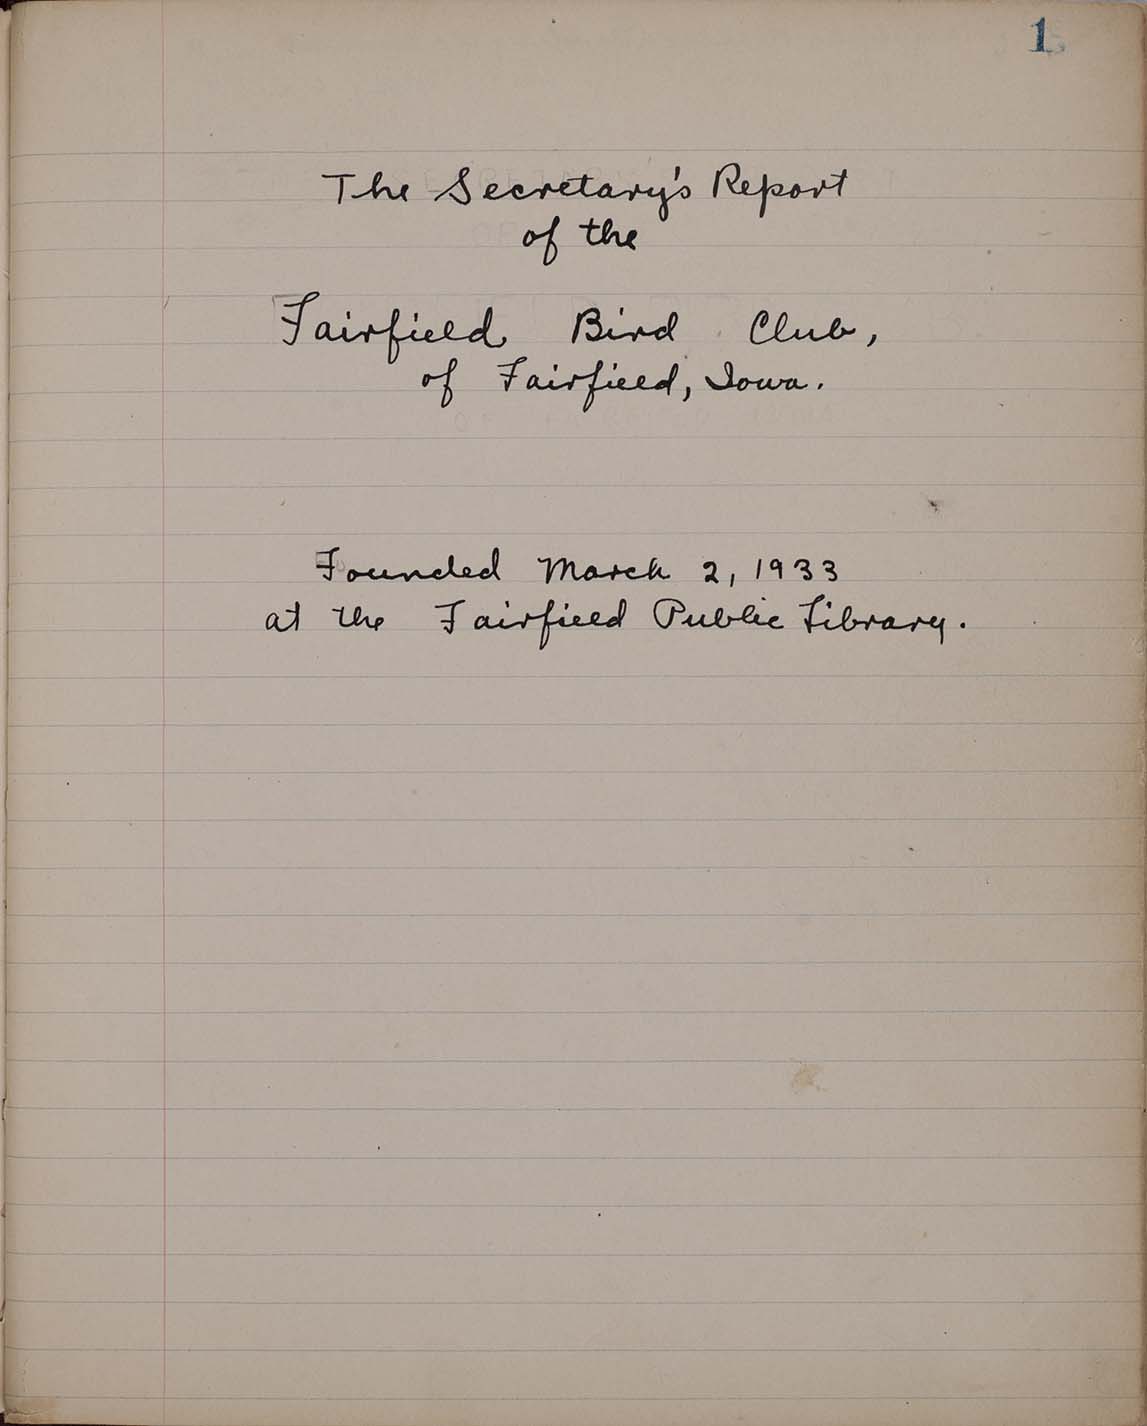 The Secretary's Report of the Fairfield Bird Club of Fairfield, Iowa, 1933-1943